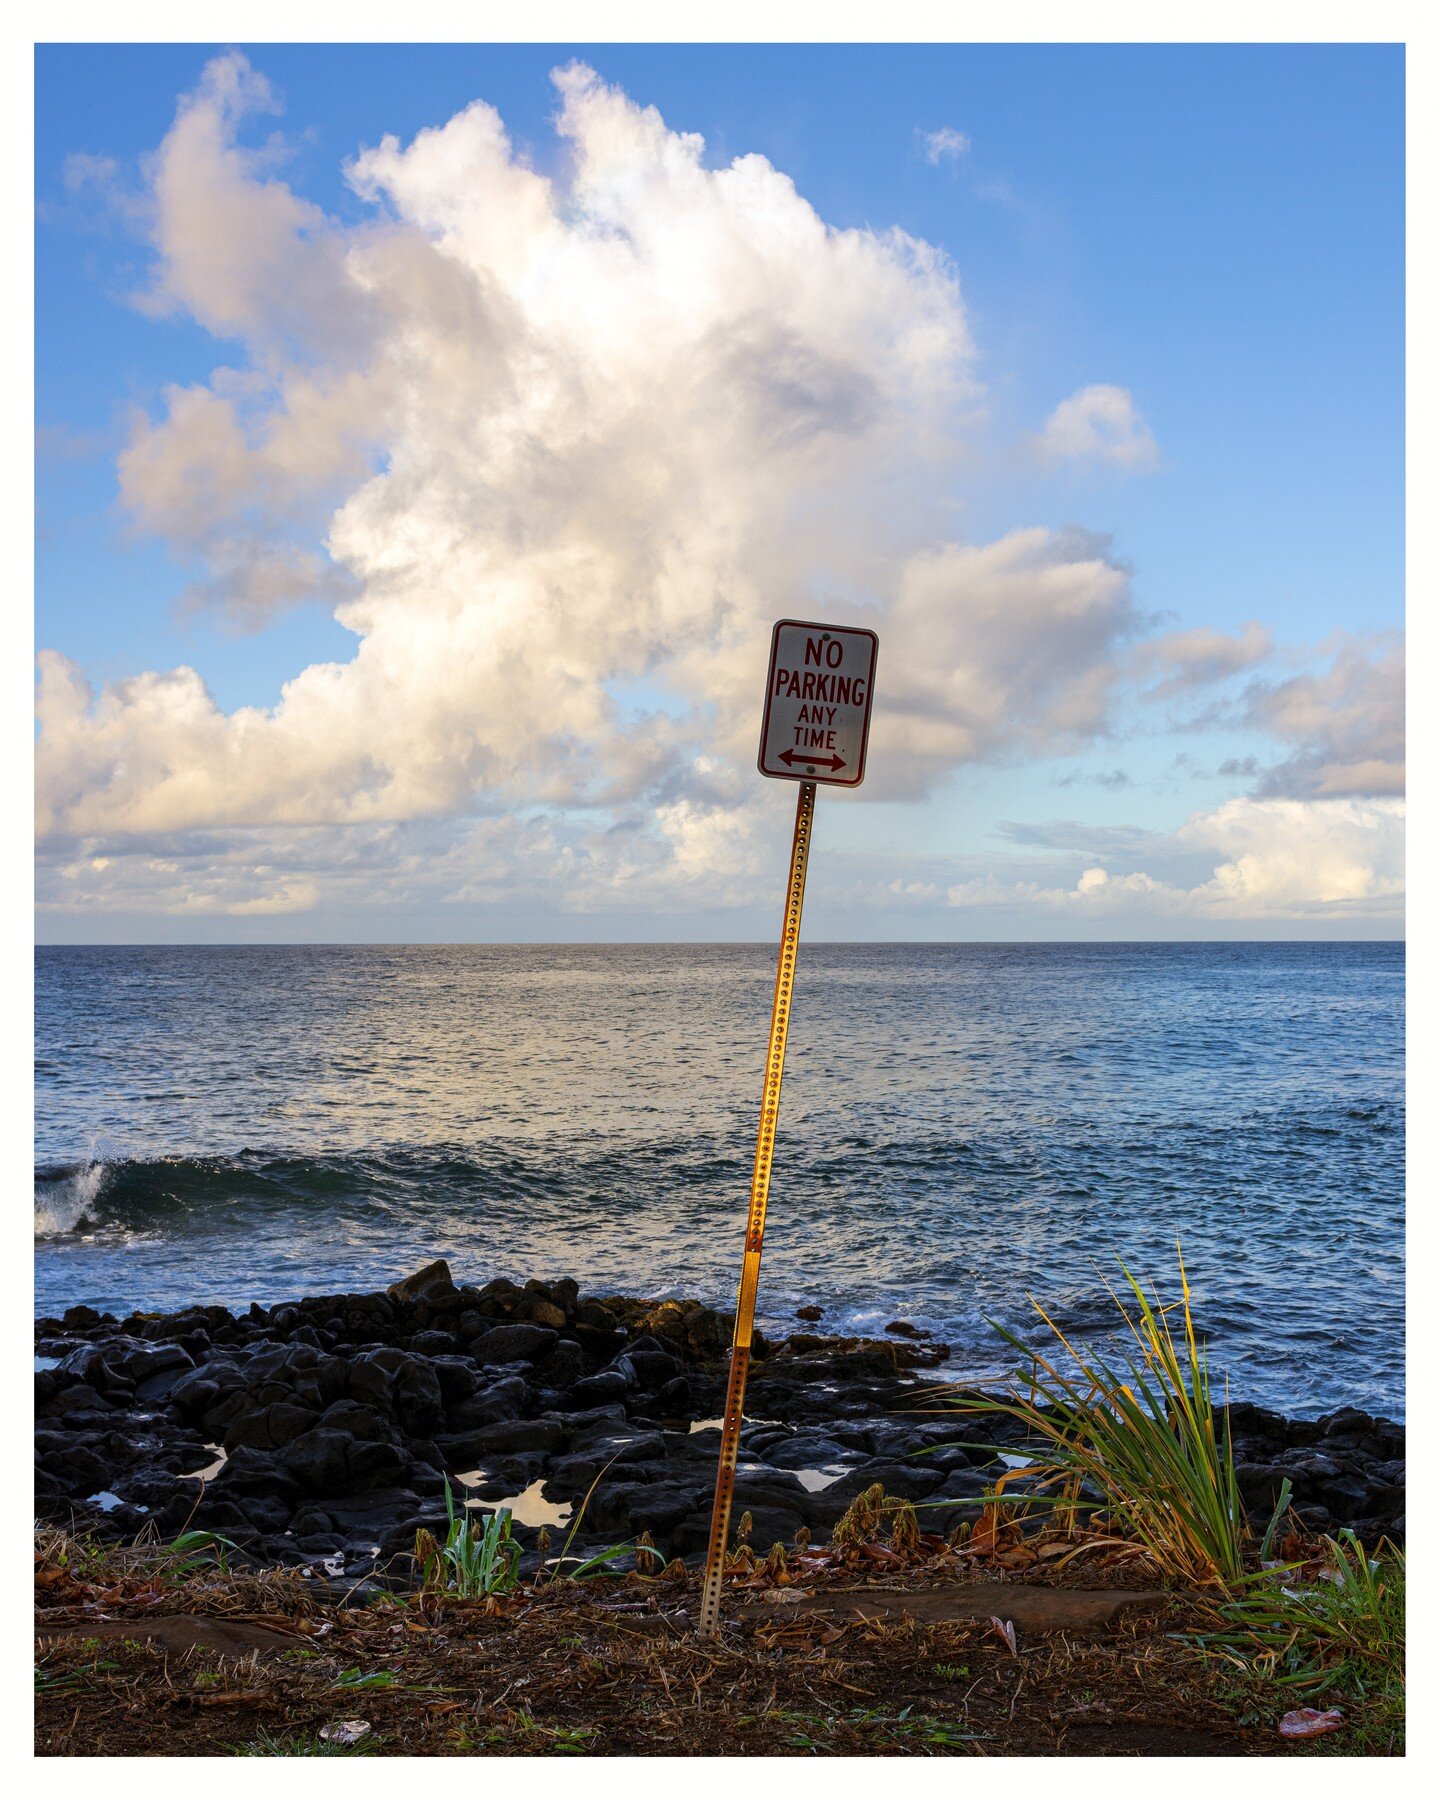 More Kauai pics are coming, still jet lagged! Snapped this on day one of my trip, near Brennecke's Beach, in Poipu. 

#kauai #hawaii #poipu #poipubeach #brenneckes #canonr5 #noparking #travel #travelphotography #koloakauai #koloa